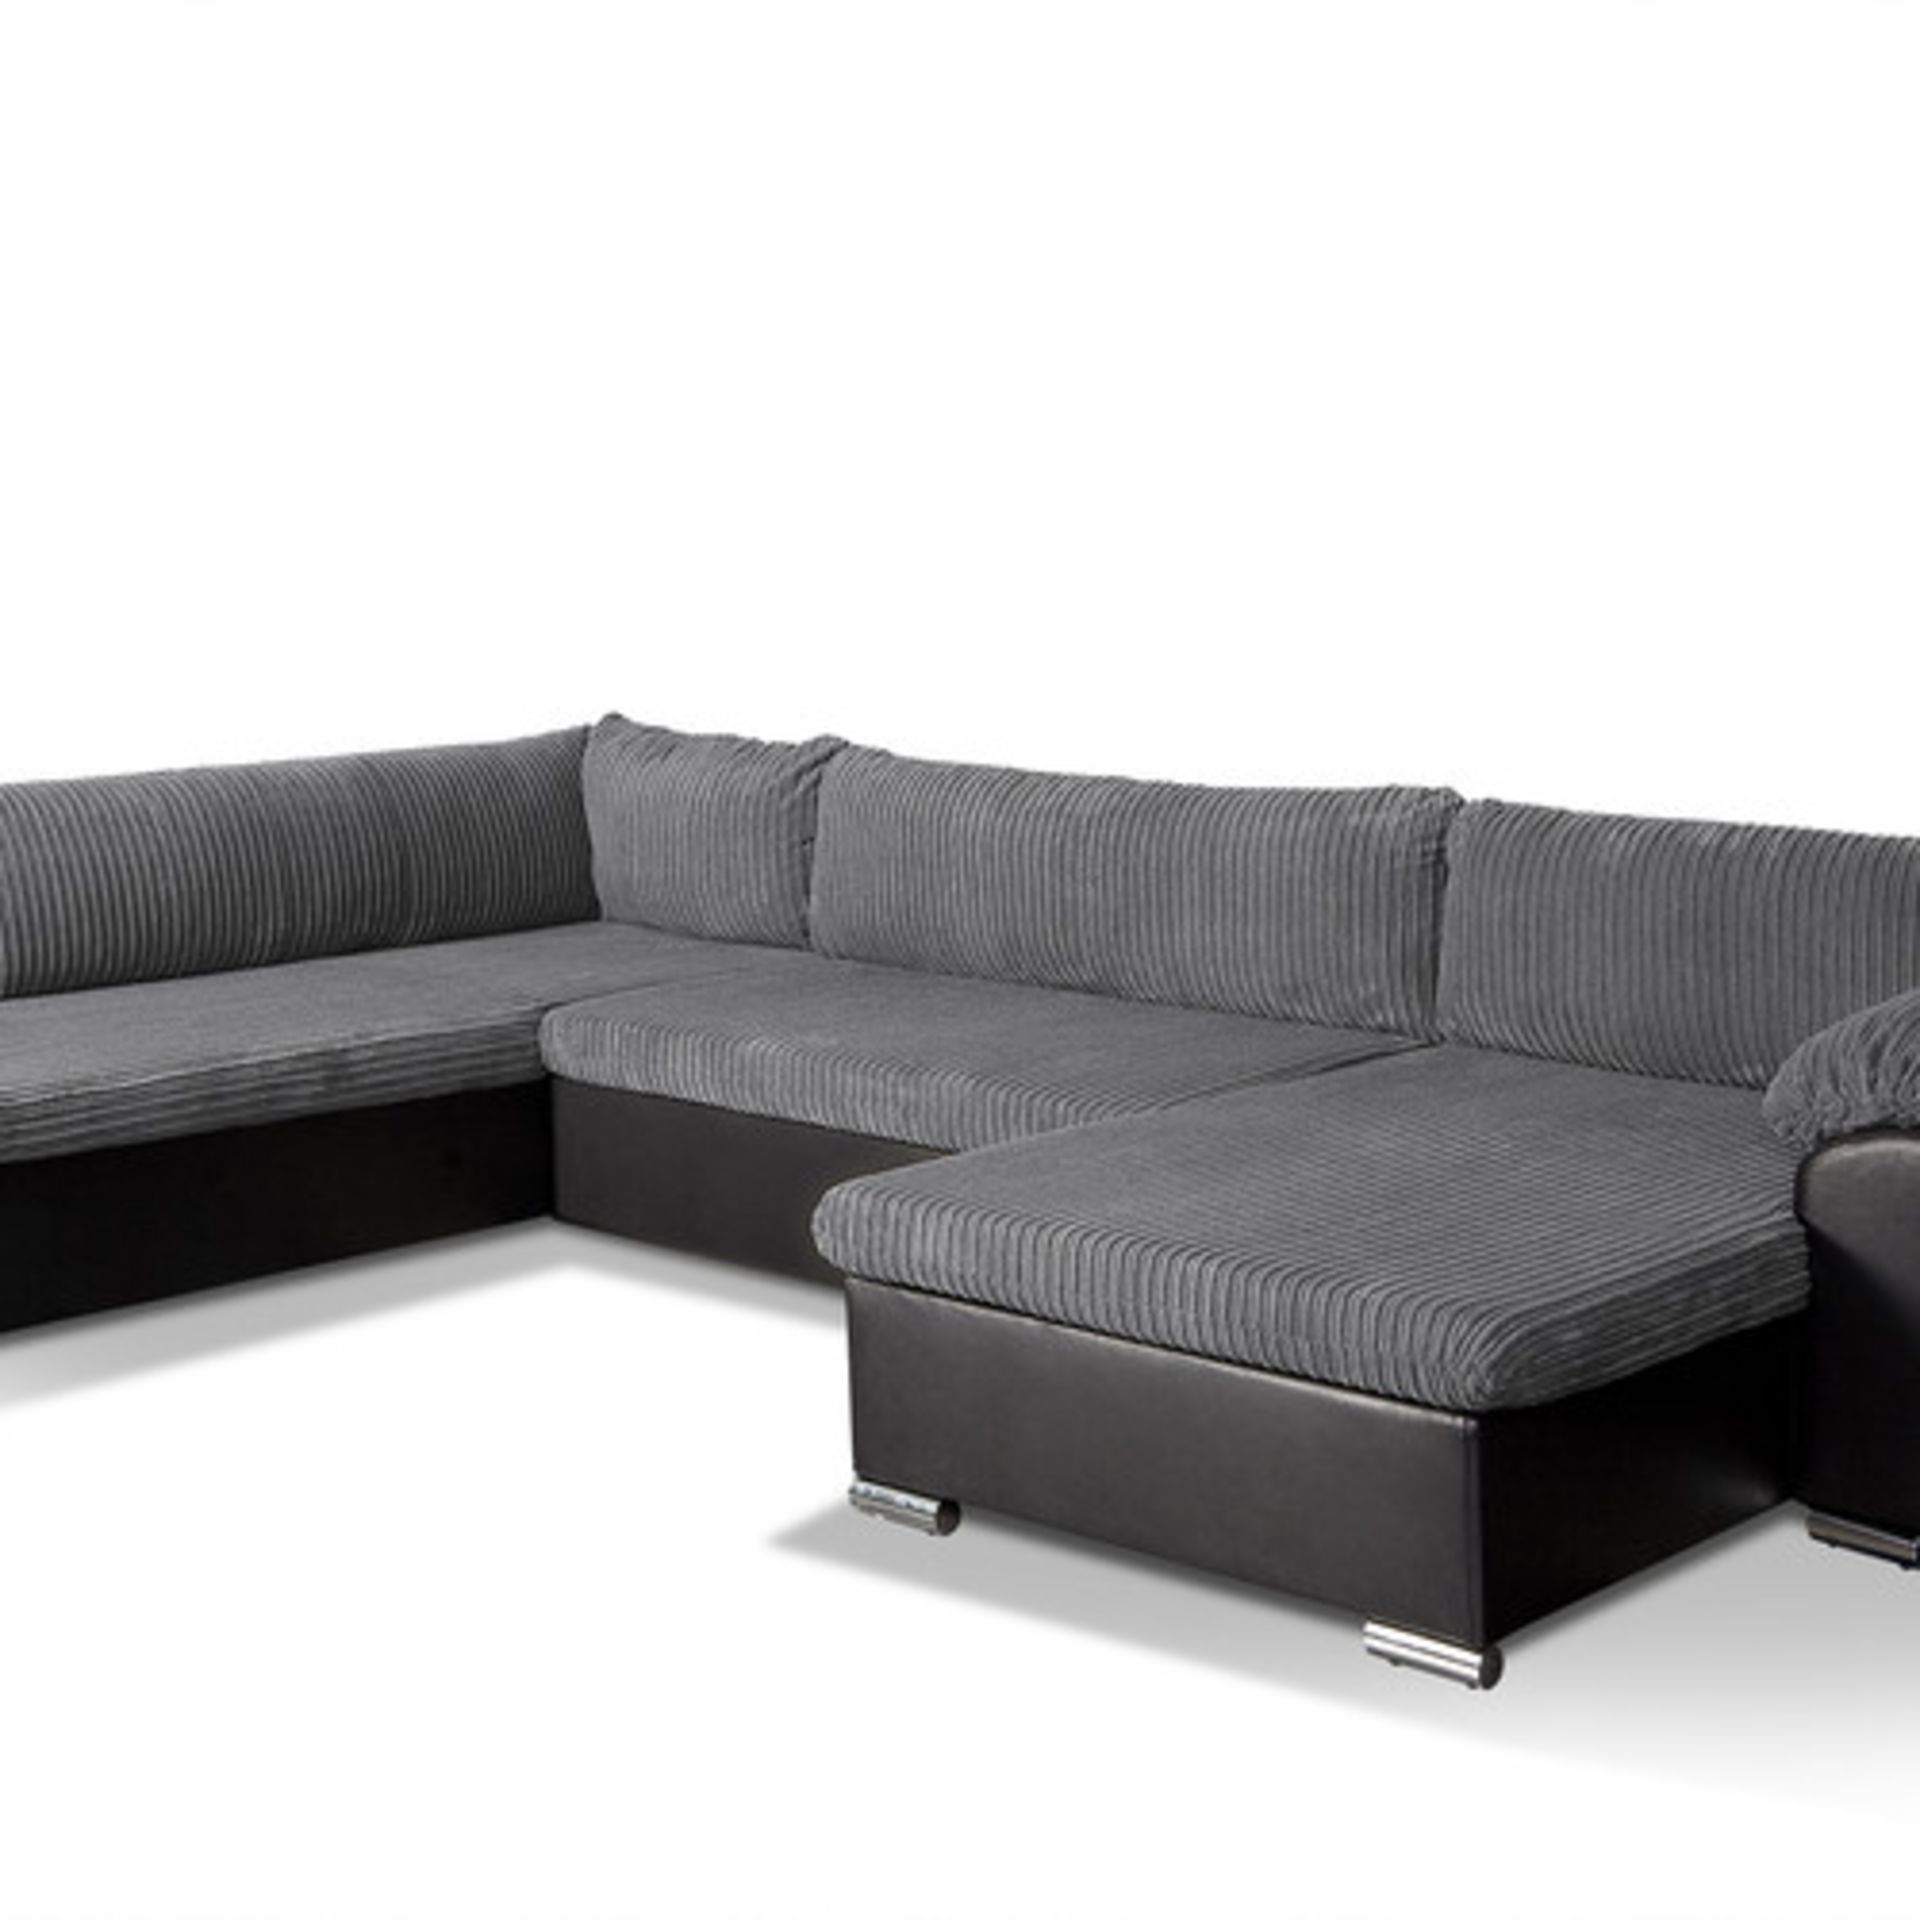 Salerno Right Hand Facing Large Corner Storage Sofa Bed In Viper Black/Jumbo Grey